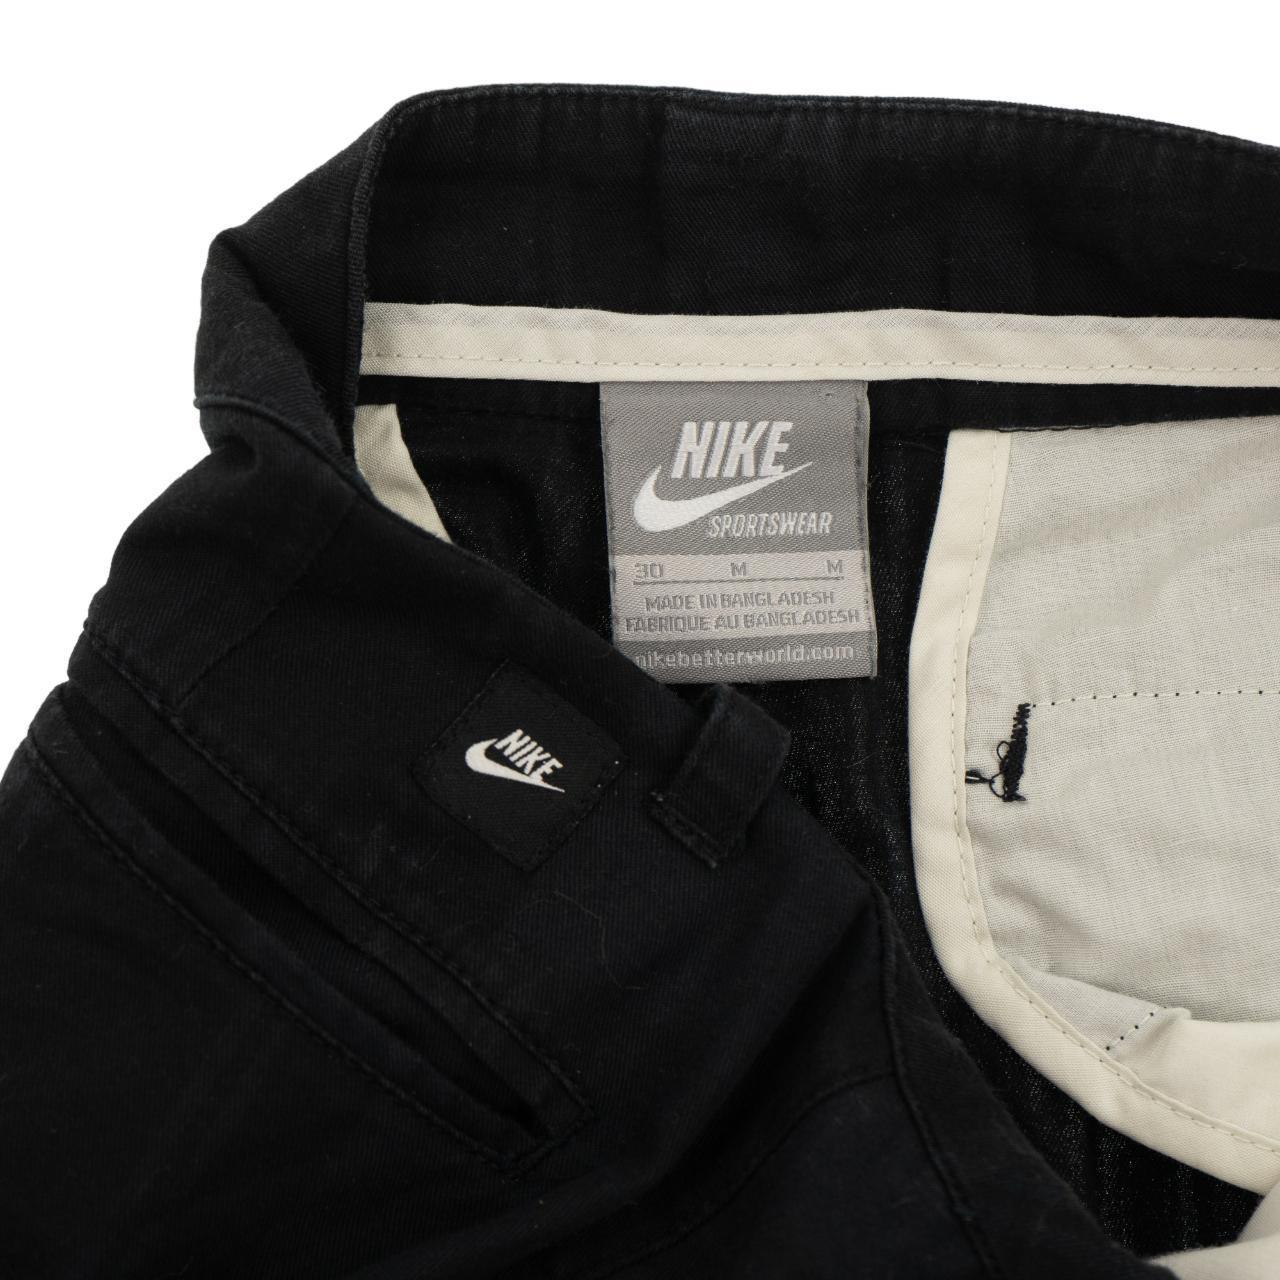 Vintage Nike Check Shorts Size W30 - Known Source